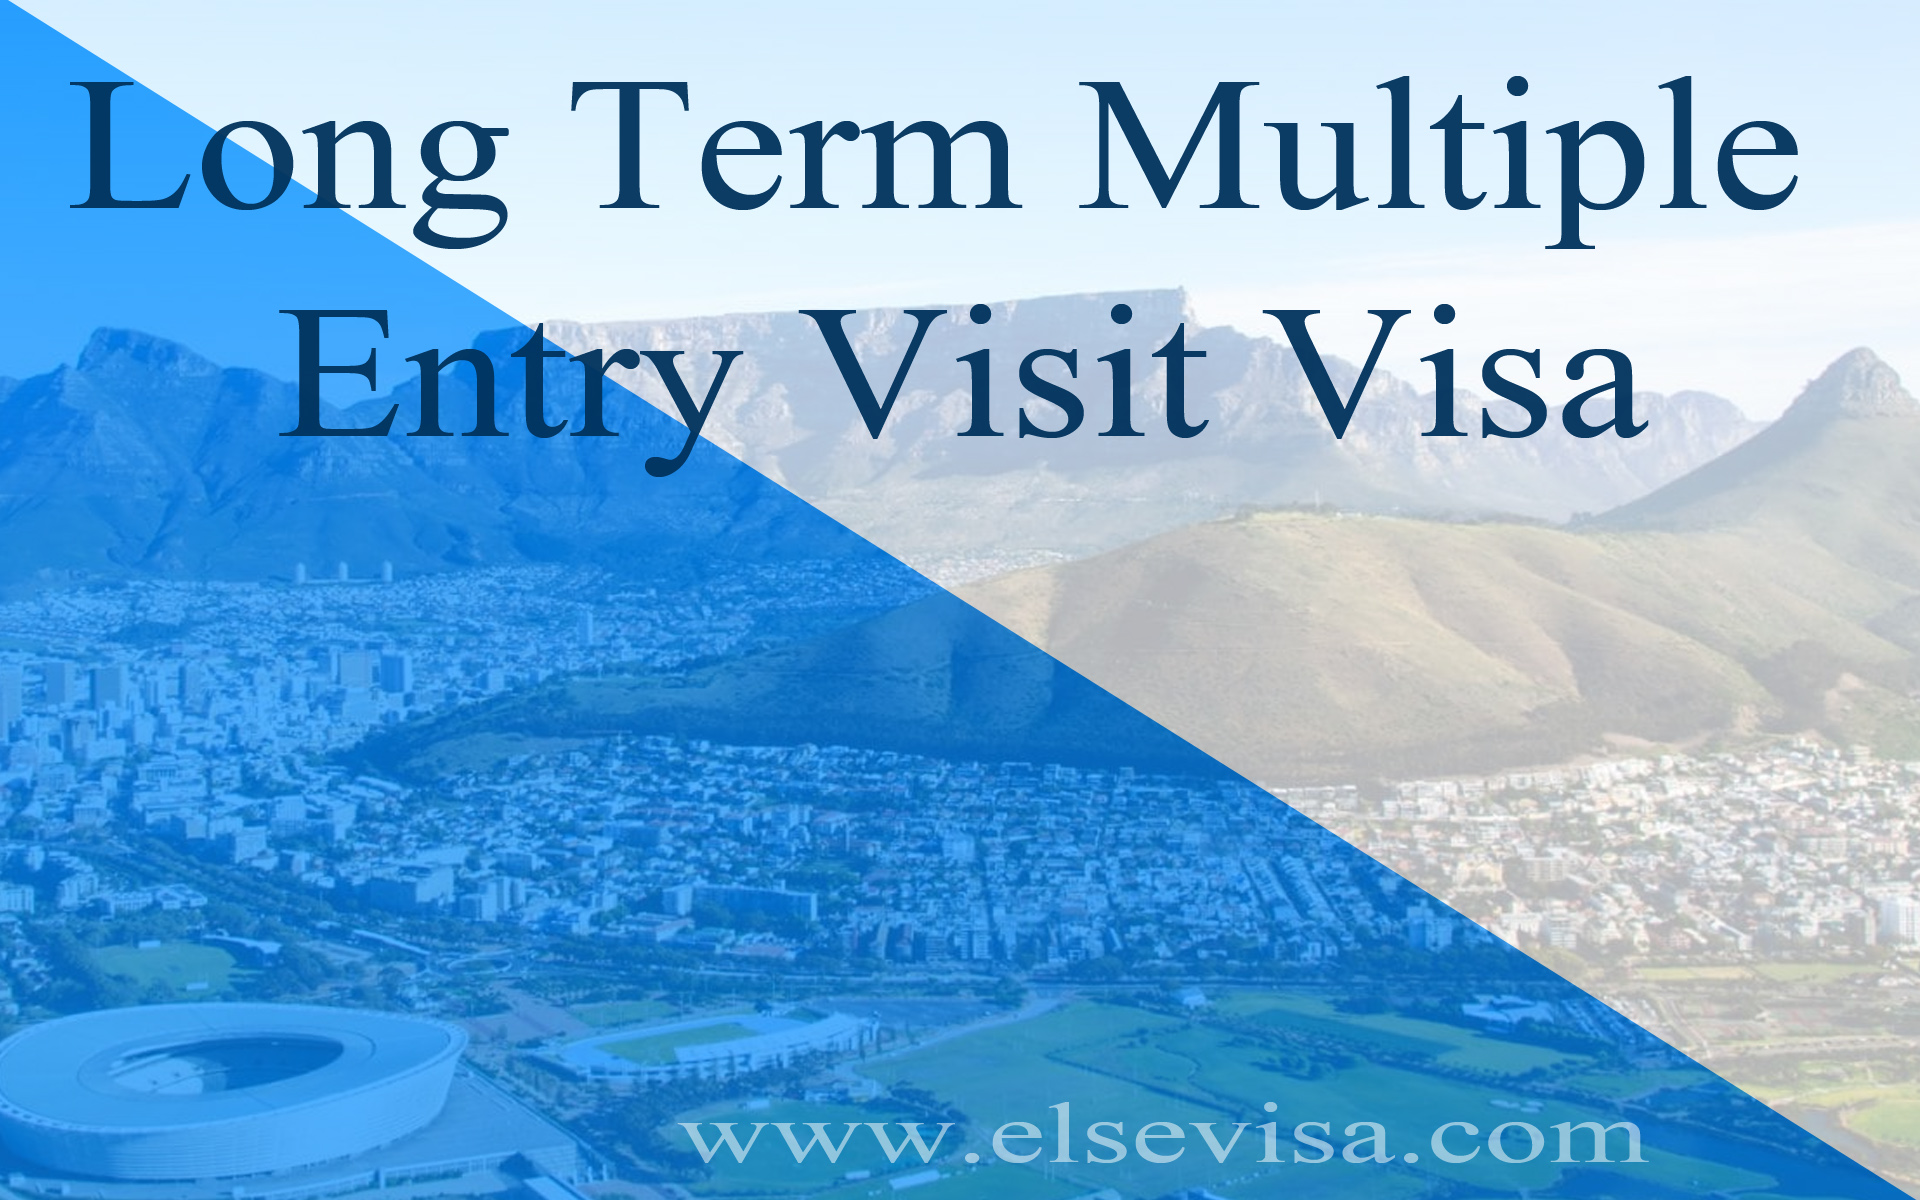 Long Term Multiple Entry Visit Visa